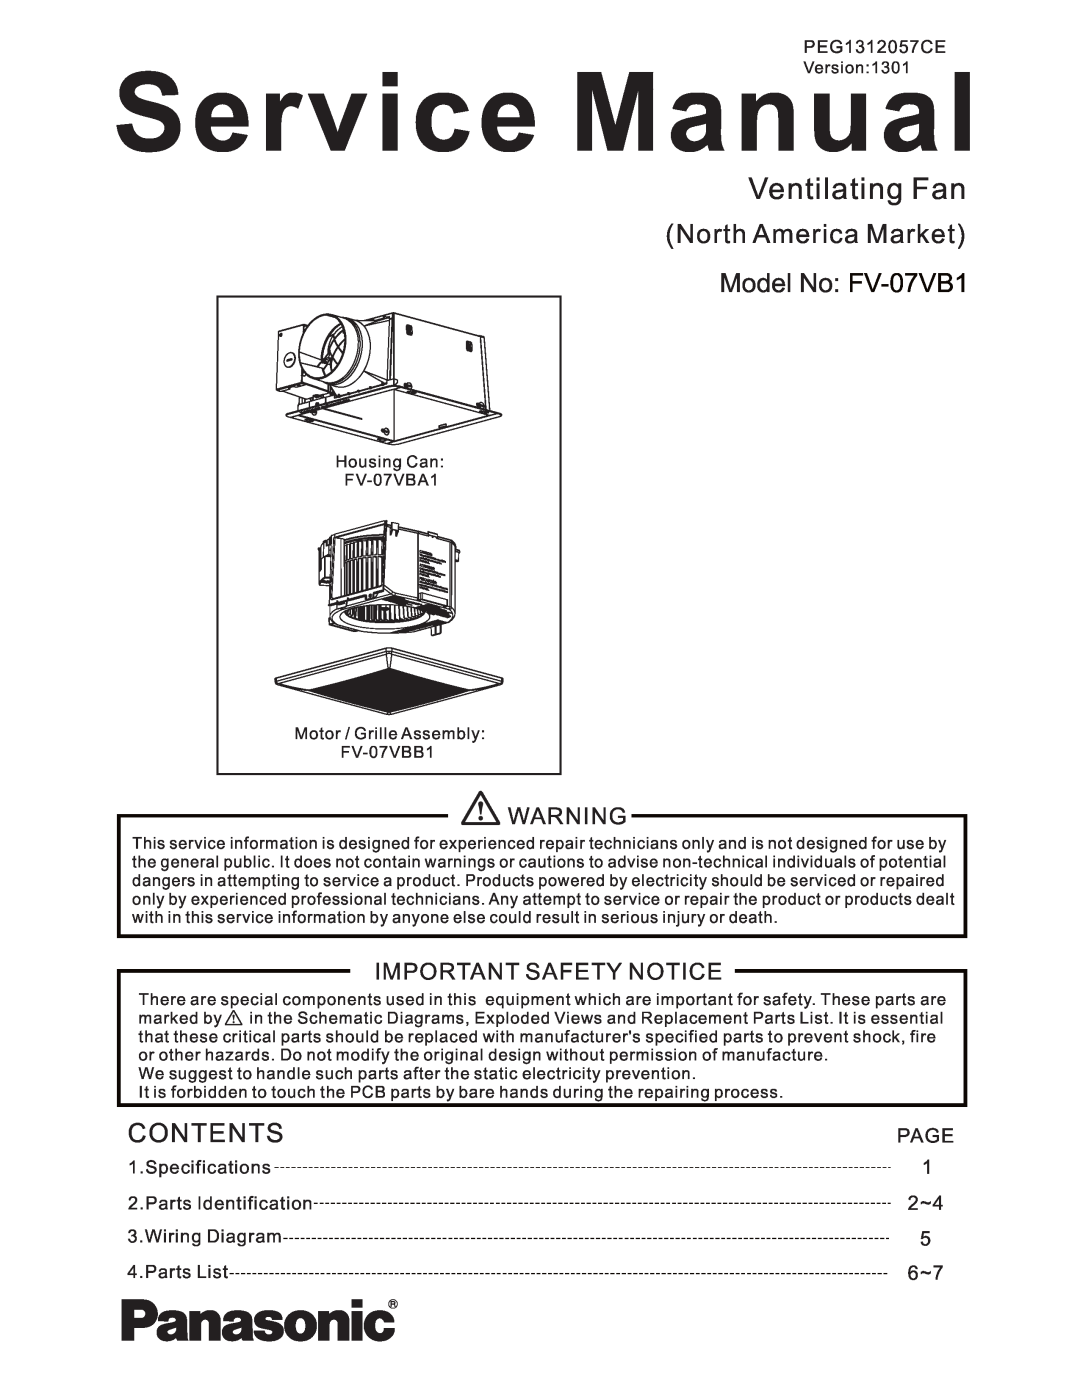 Panasonic service manual Ventilating Fan, Page, Service Manual, North America Market Model No FV-07VB1, Contents 